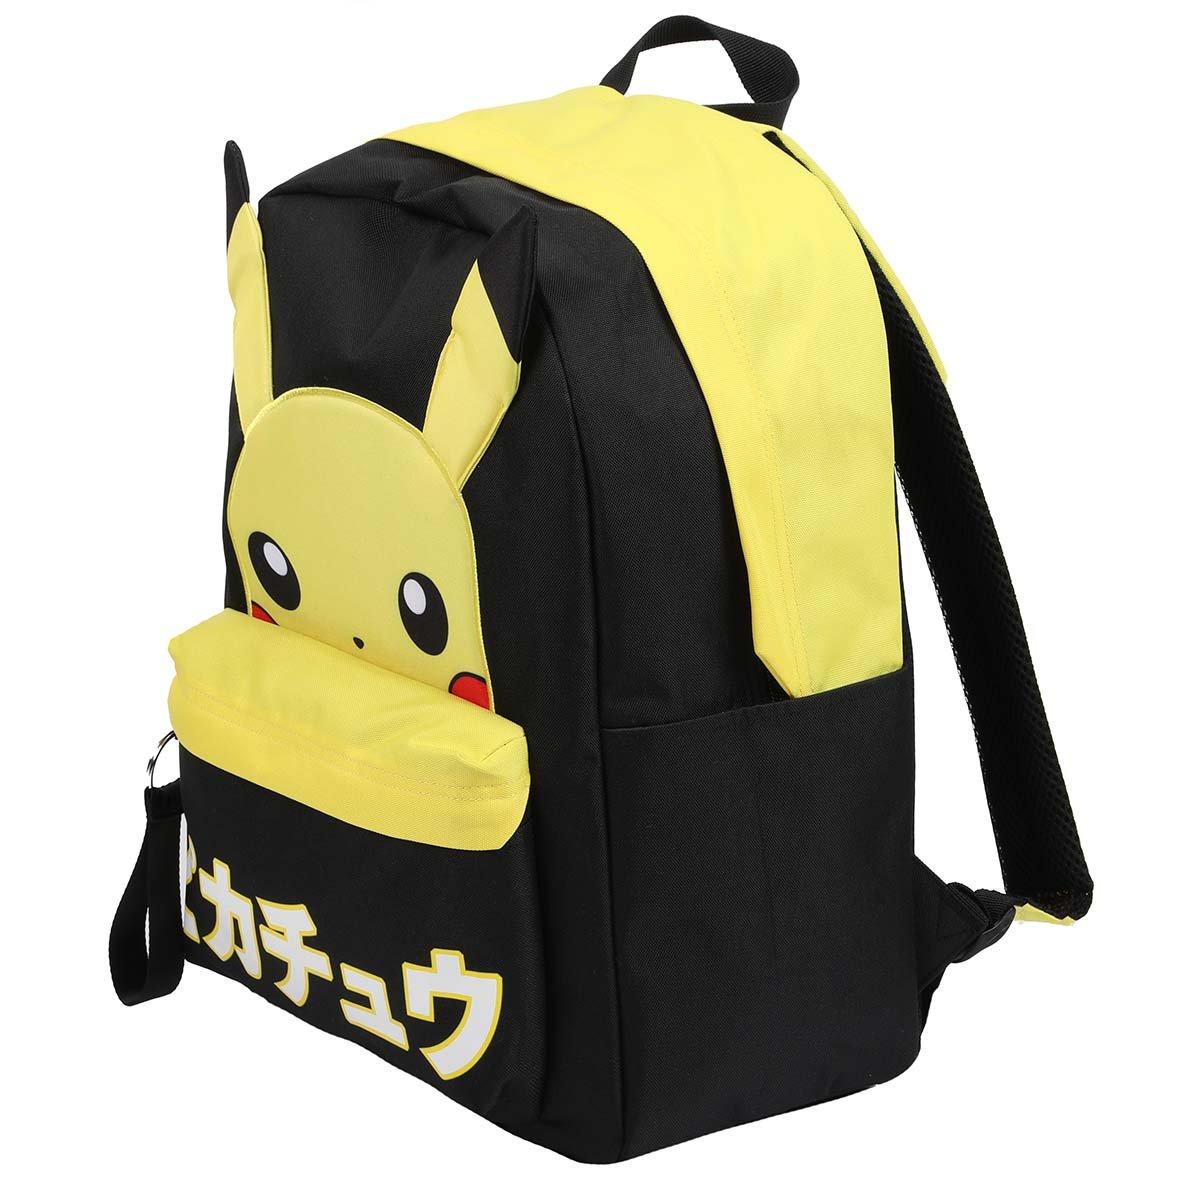 https://media.gamestop.com/i/gamestop/11170164/Pokemon-Pikachu-Backpack